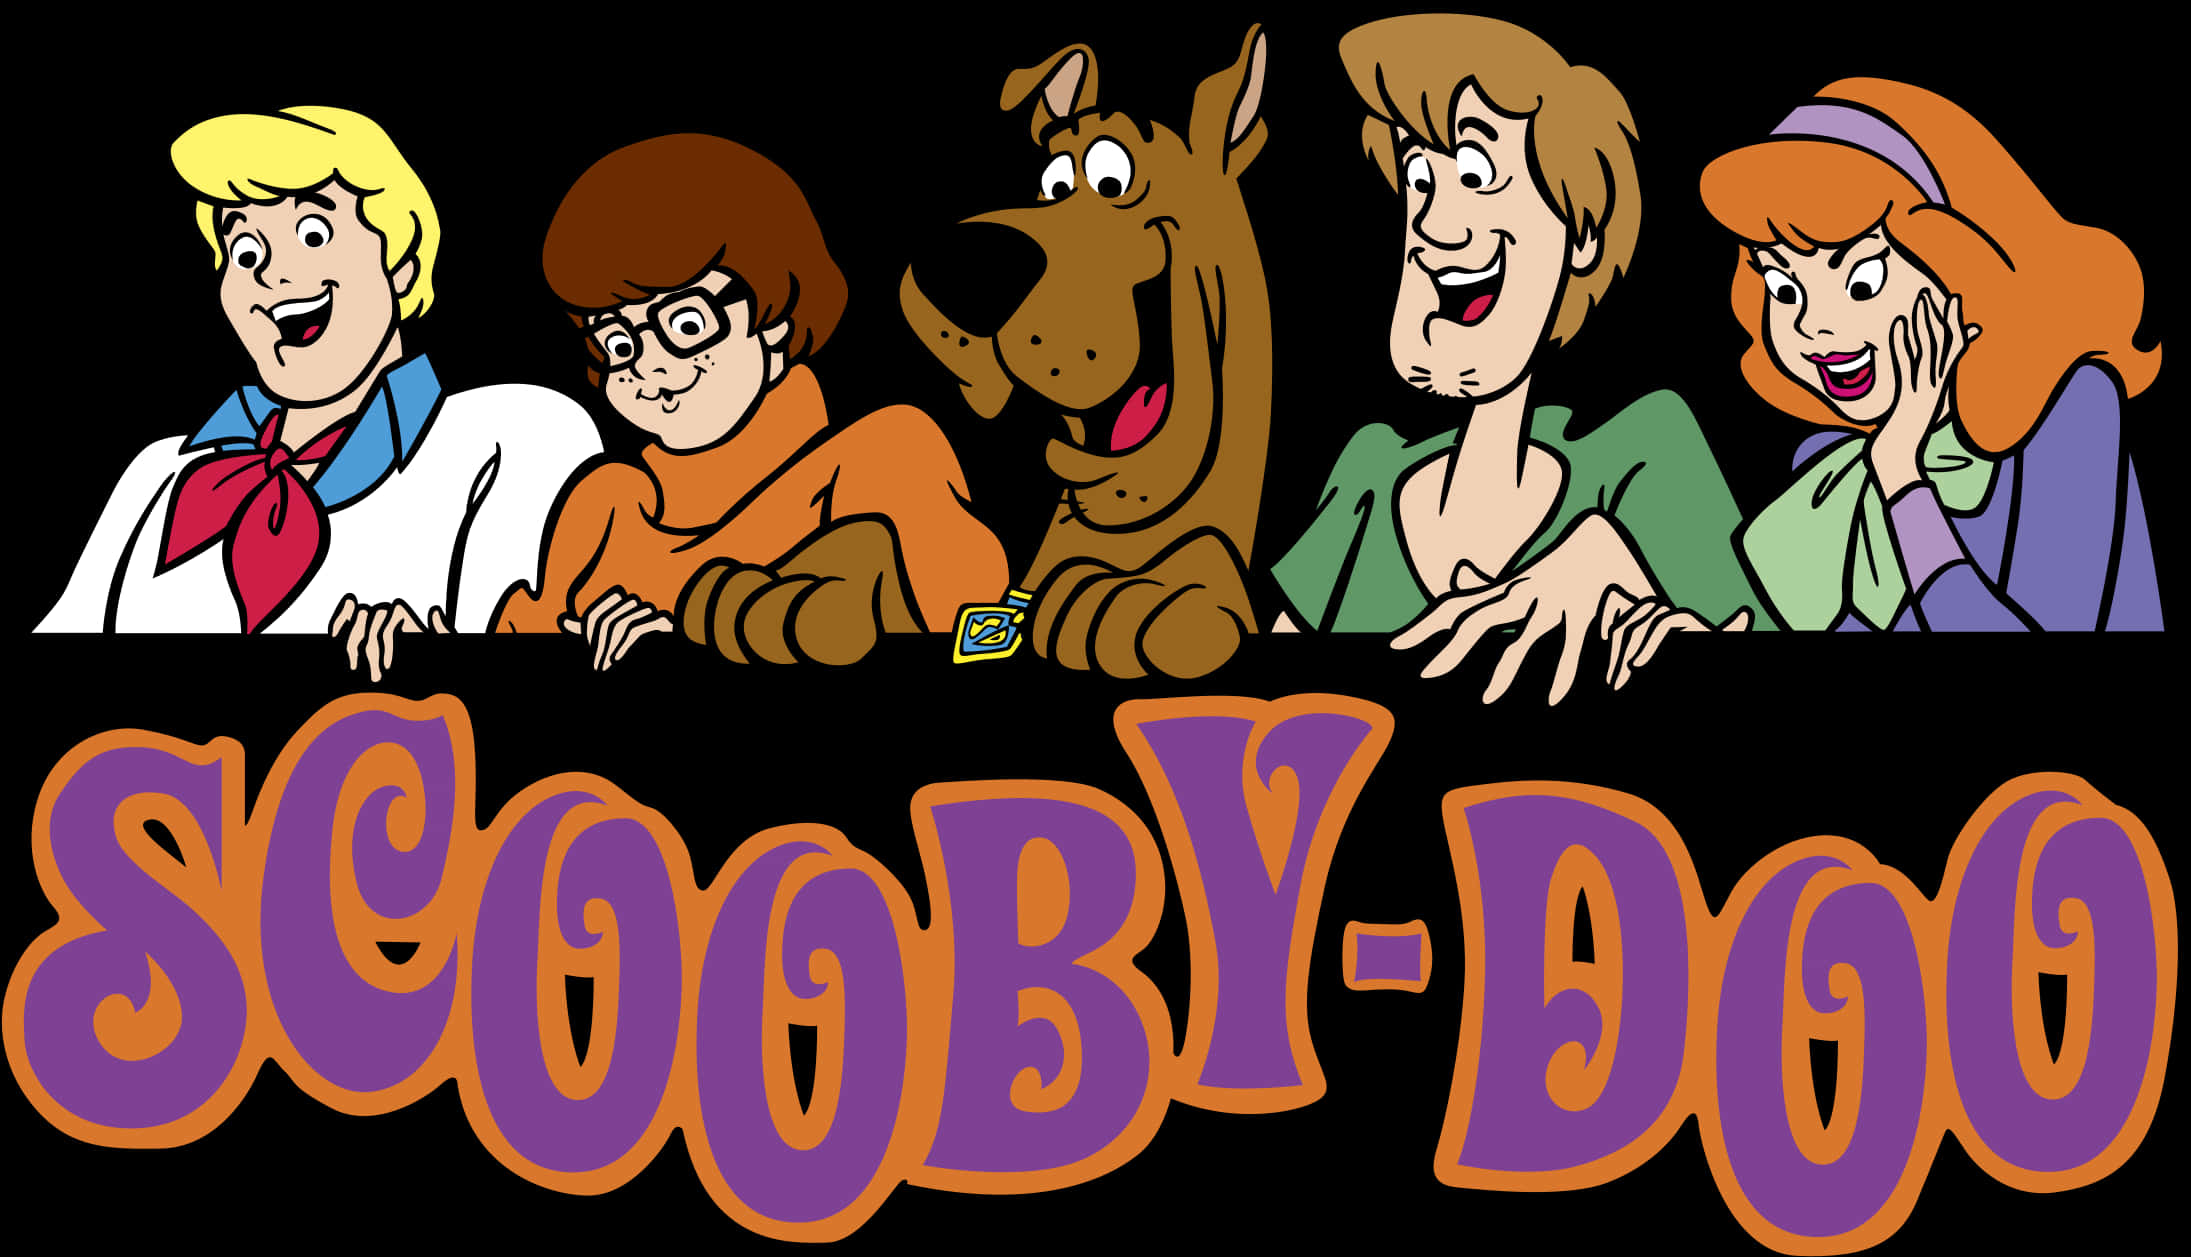 Scooby Doo Classic Cartoon Cast PNG image